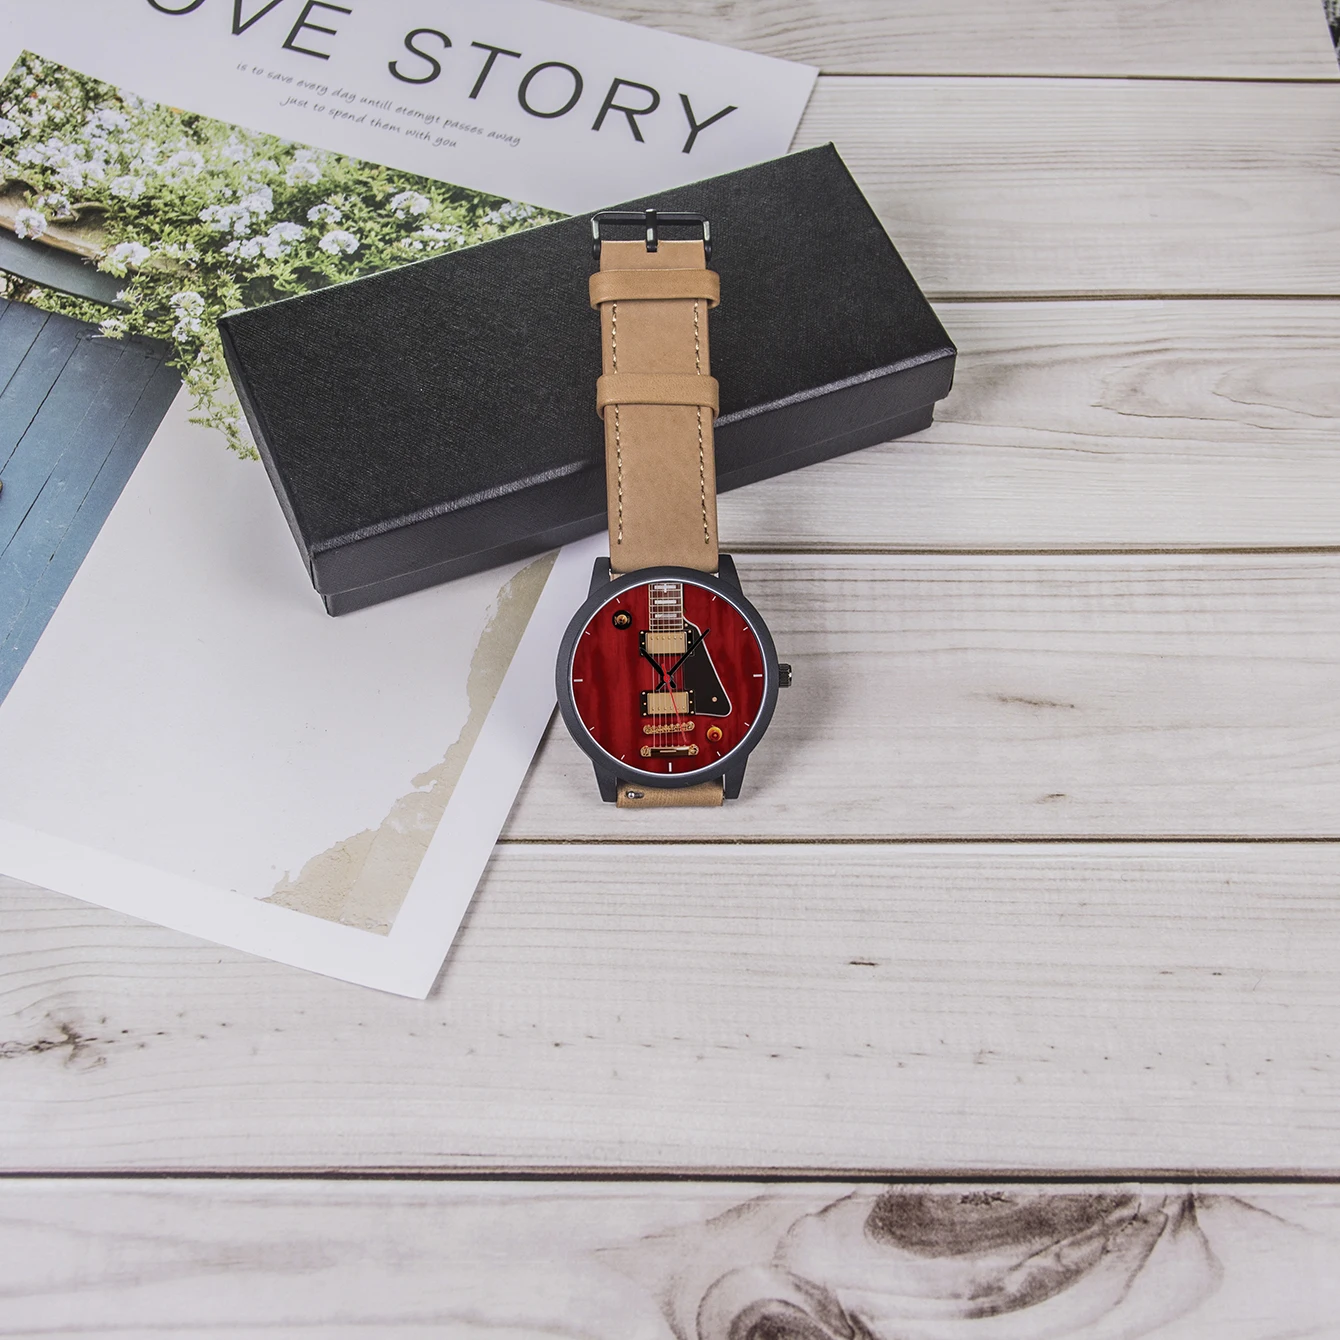 Factory Direct Guitar Bass Design Customized Dial Fashionable Cool Decorative Men's Quartz Wrist Watch Gifts For Musician